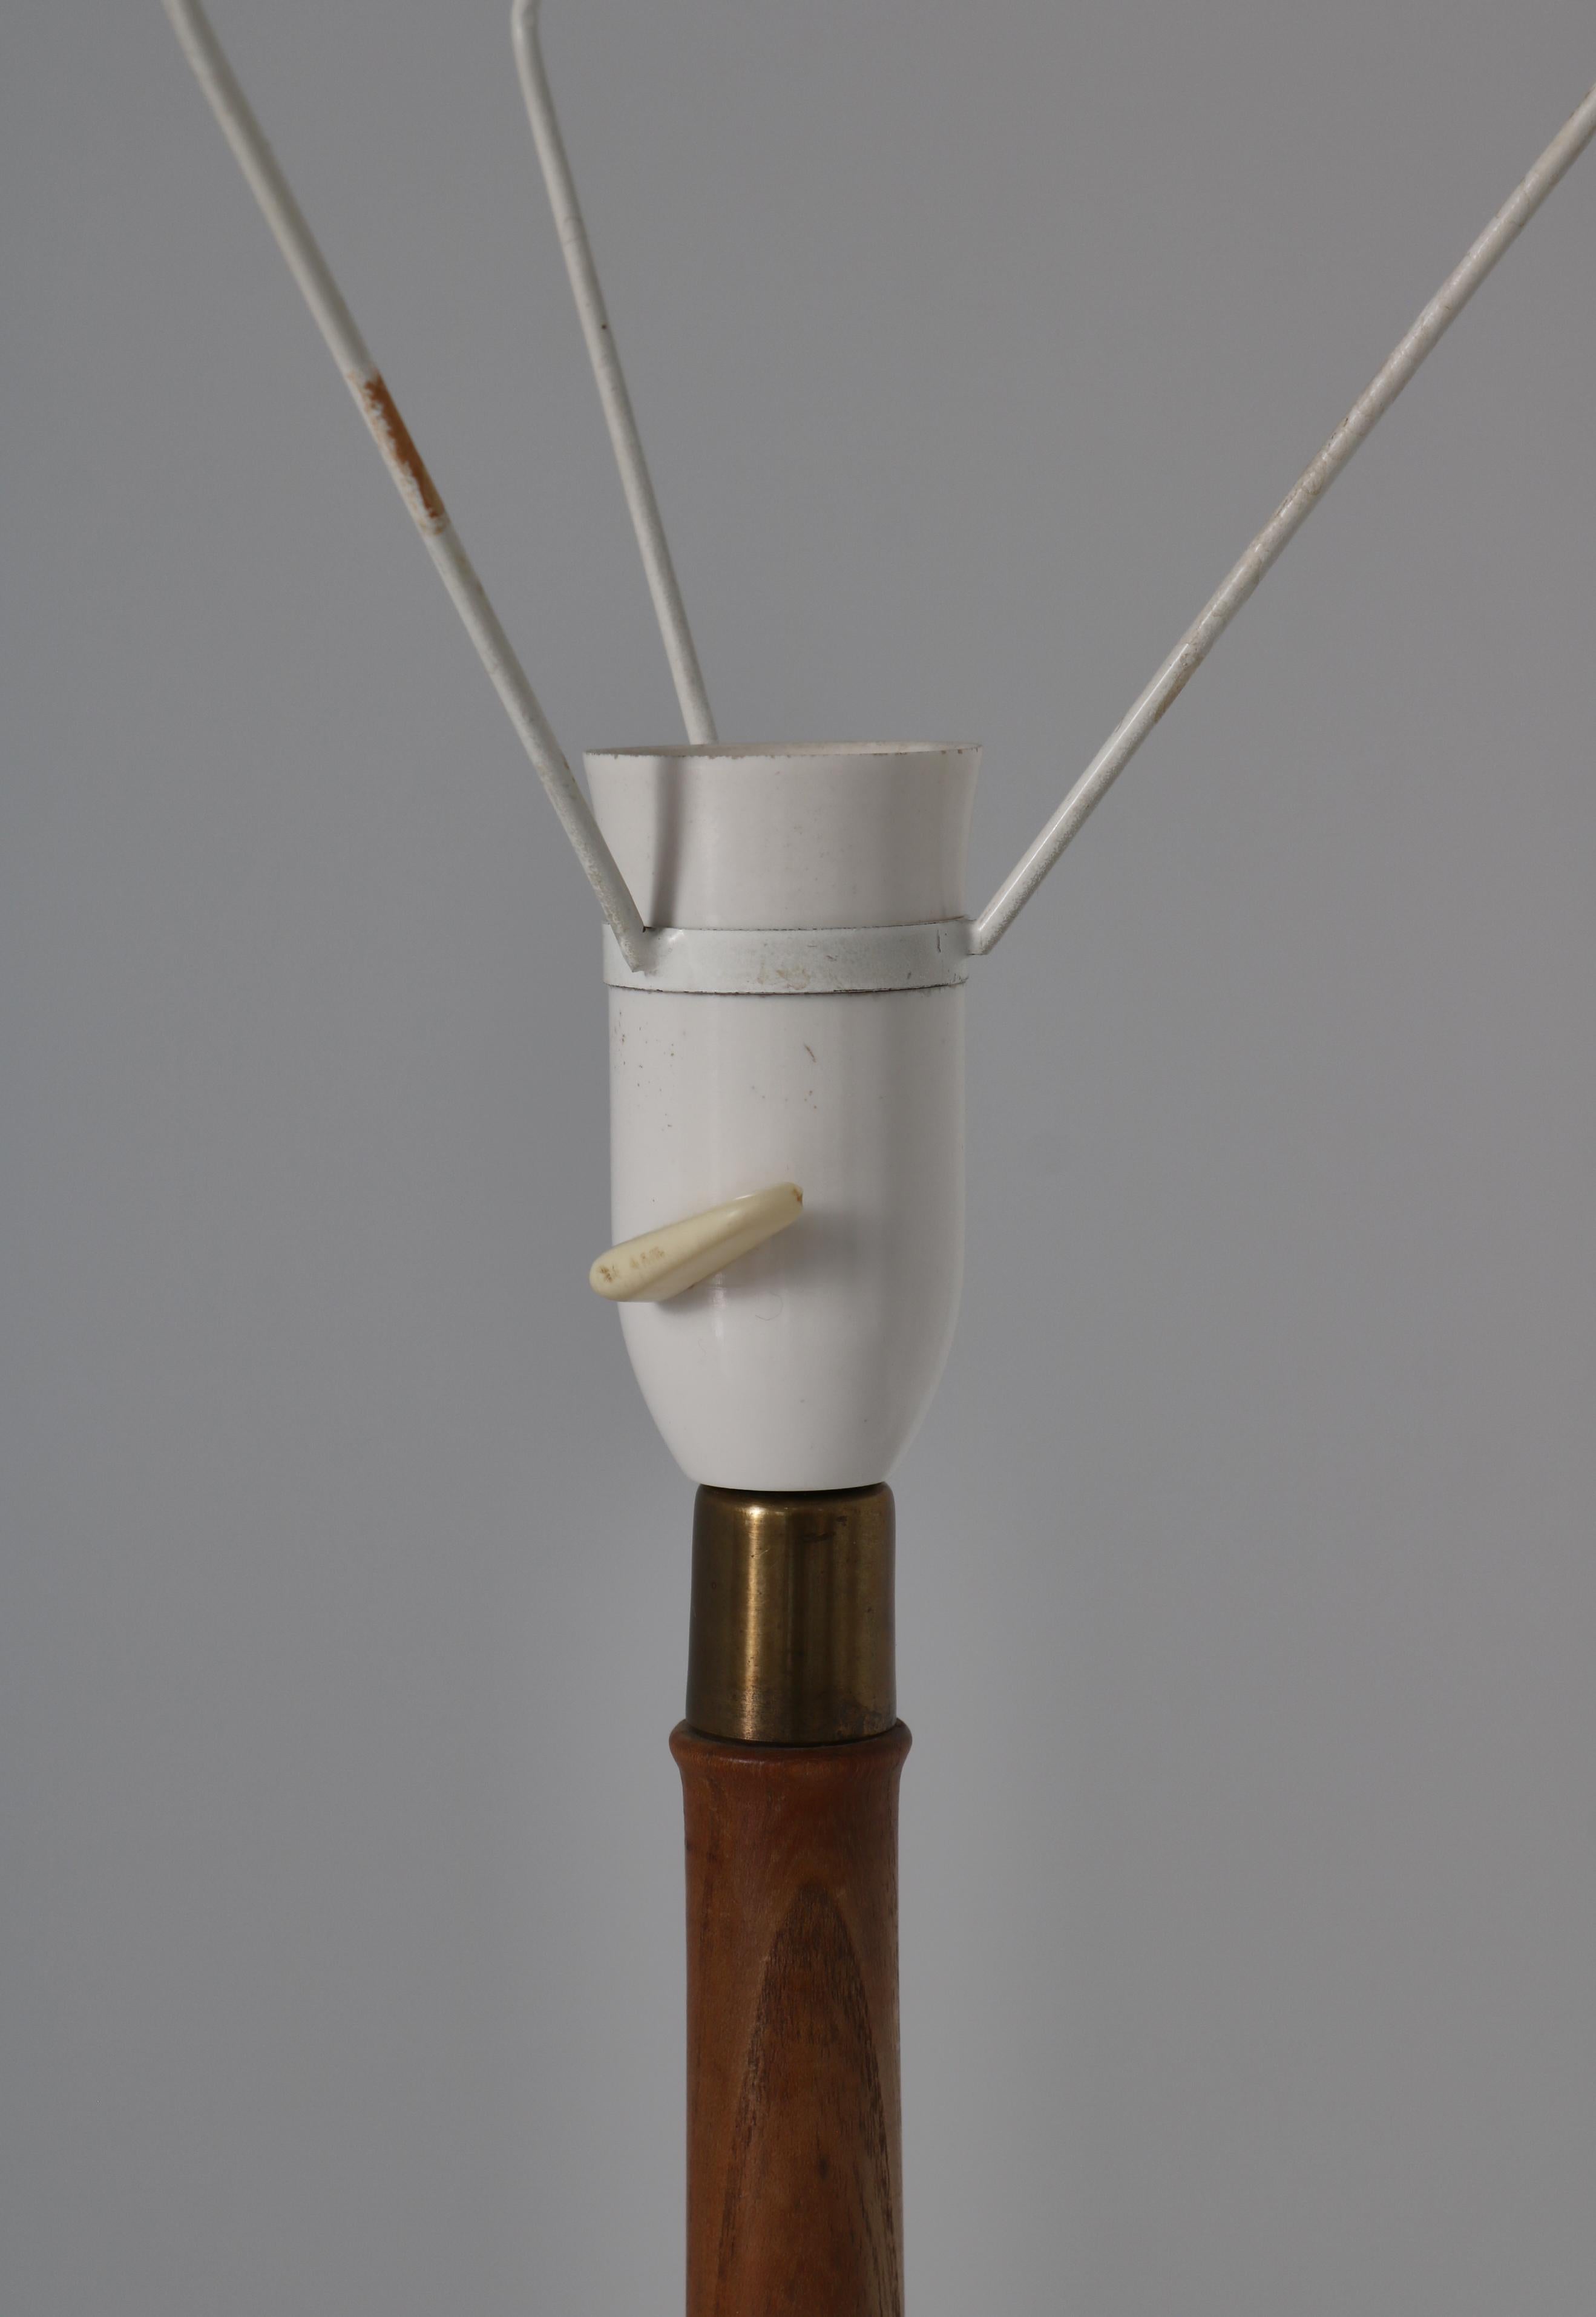 Kaare Klint Table Lamp in Ash Wood and Hand Folded Le Klint Shade, Denmark 1940s For Sale 5